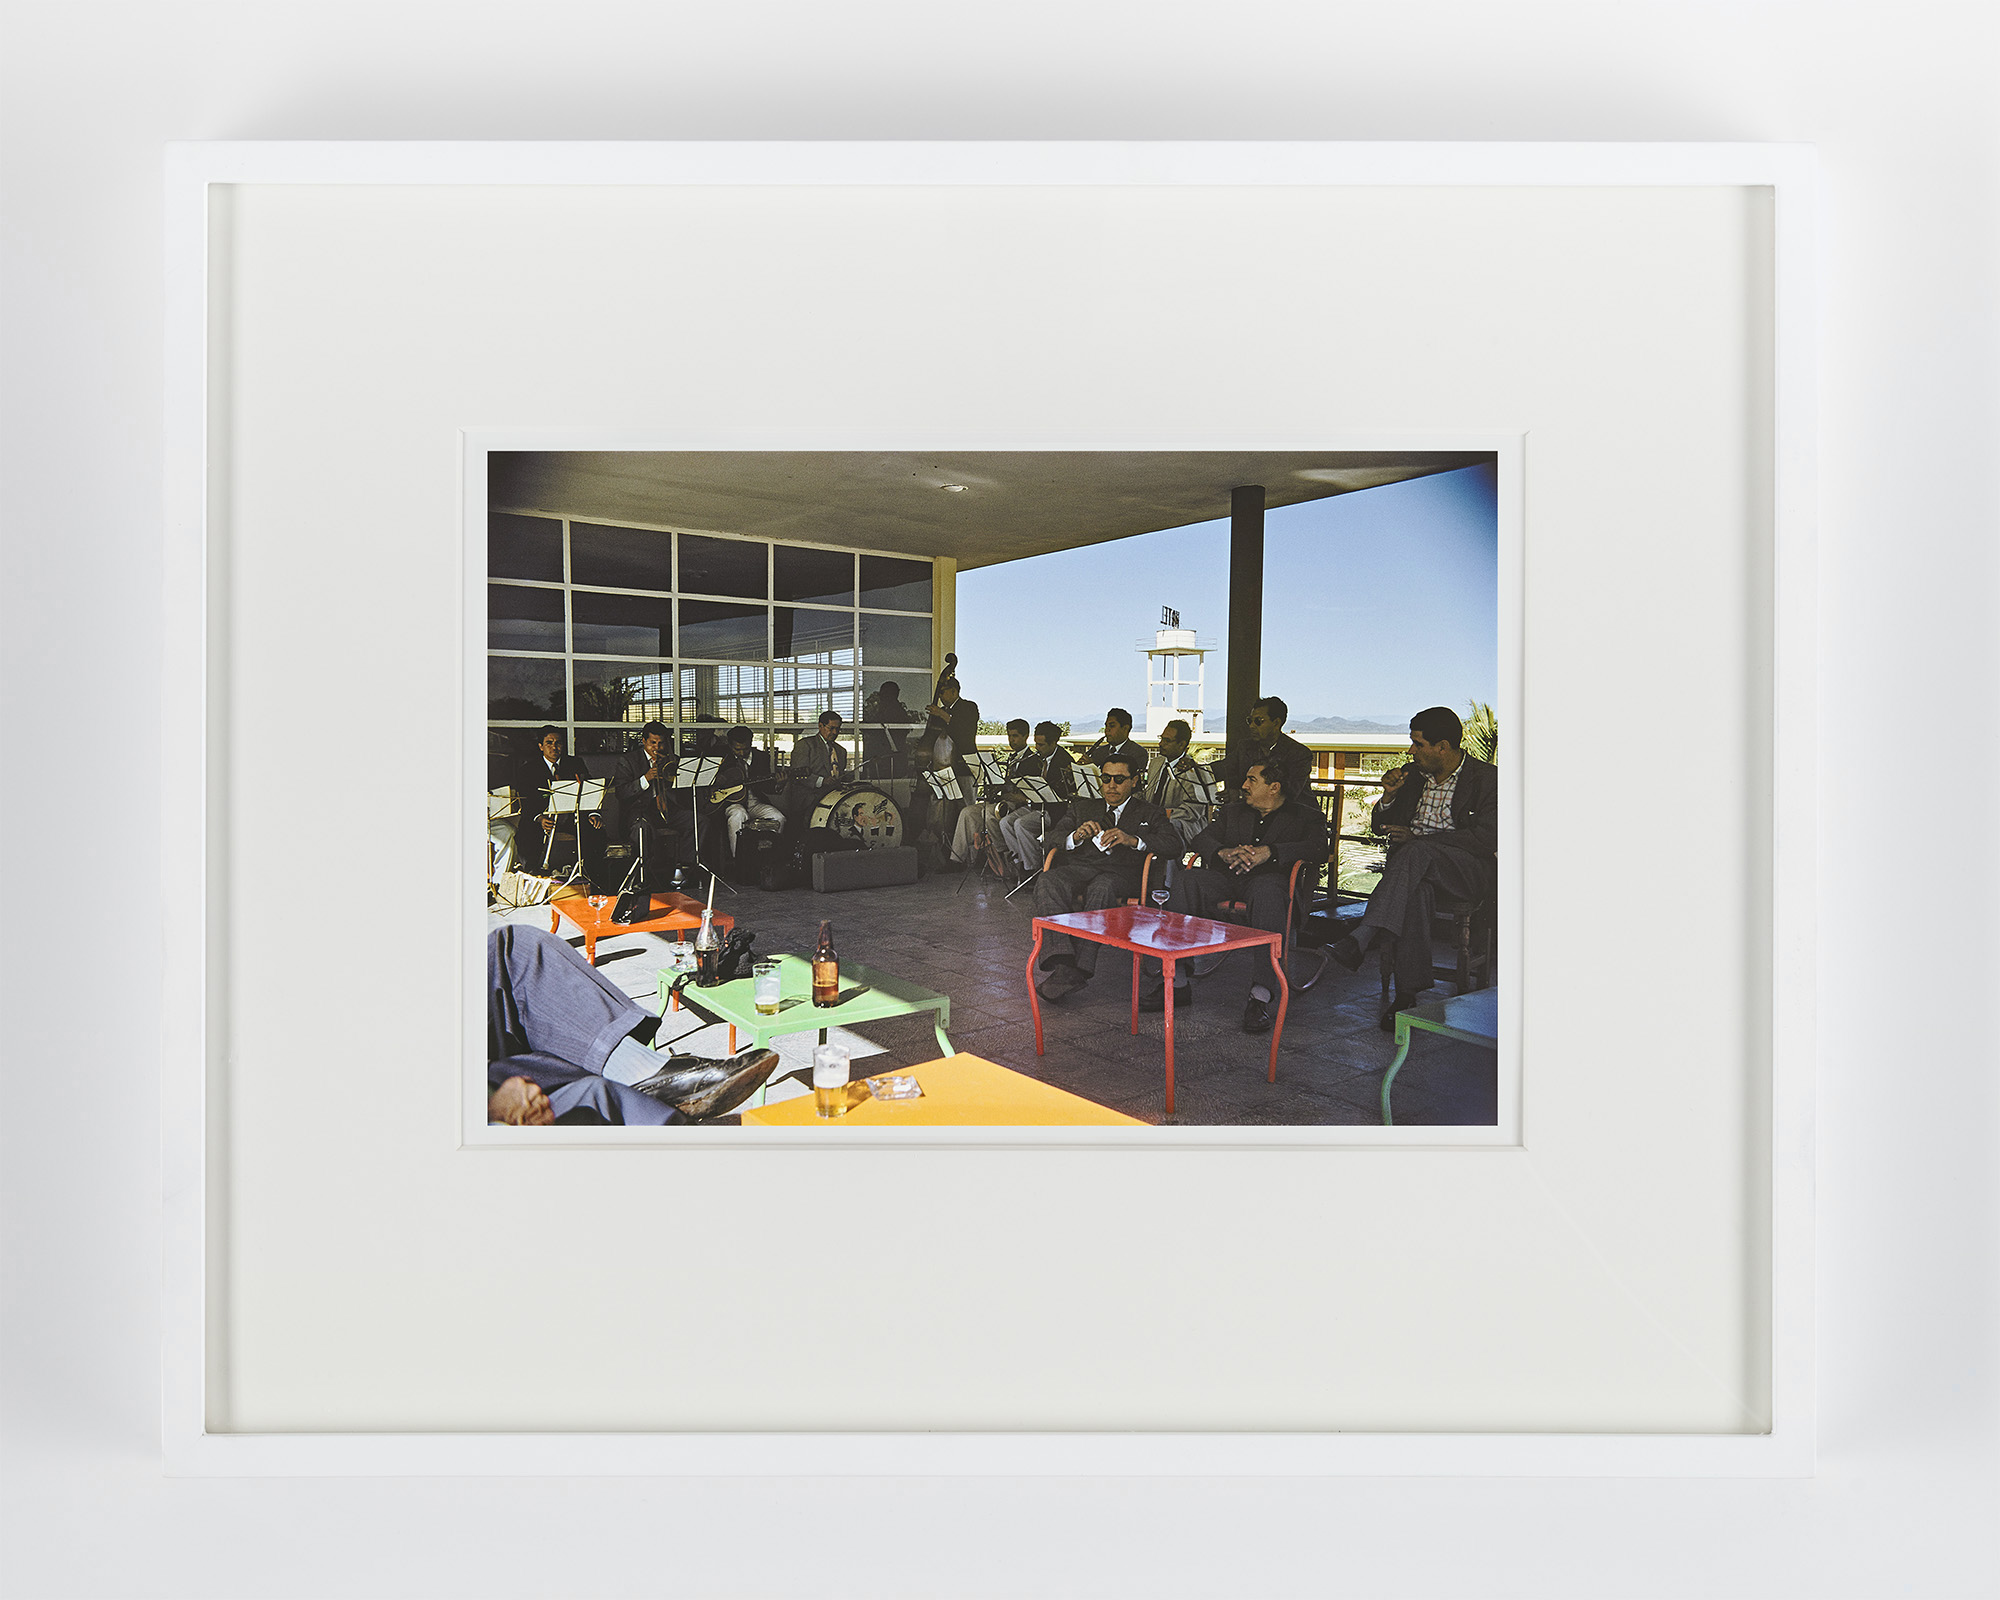 Paul Outerbridge
Motel Bar, Mazatlán, Mexico, c.1948
CarbroArt™ digital pigment print process, by Steidl in Göttingen, 2018
Arches 88, 300 gsm 100% cotton acid-free paper
16“ x 20“ framed Edition of 25